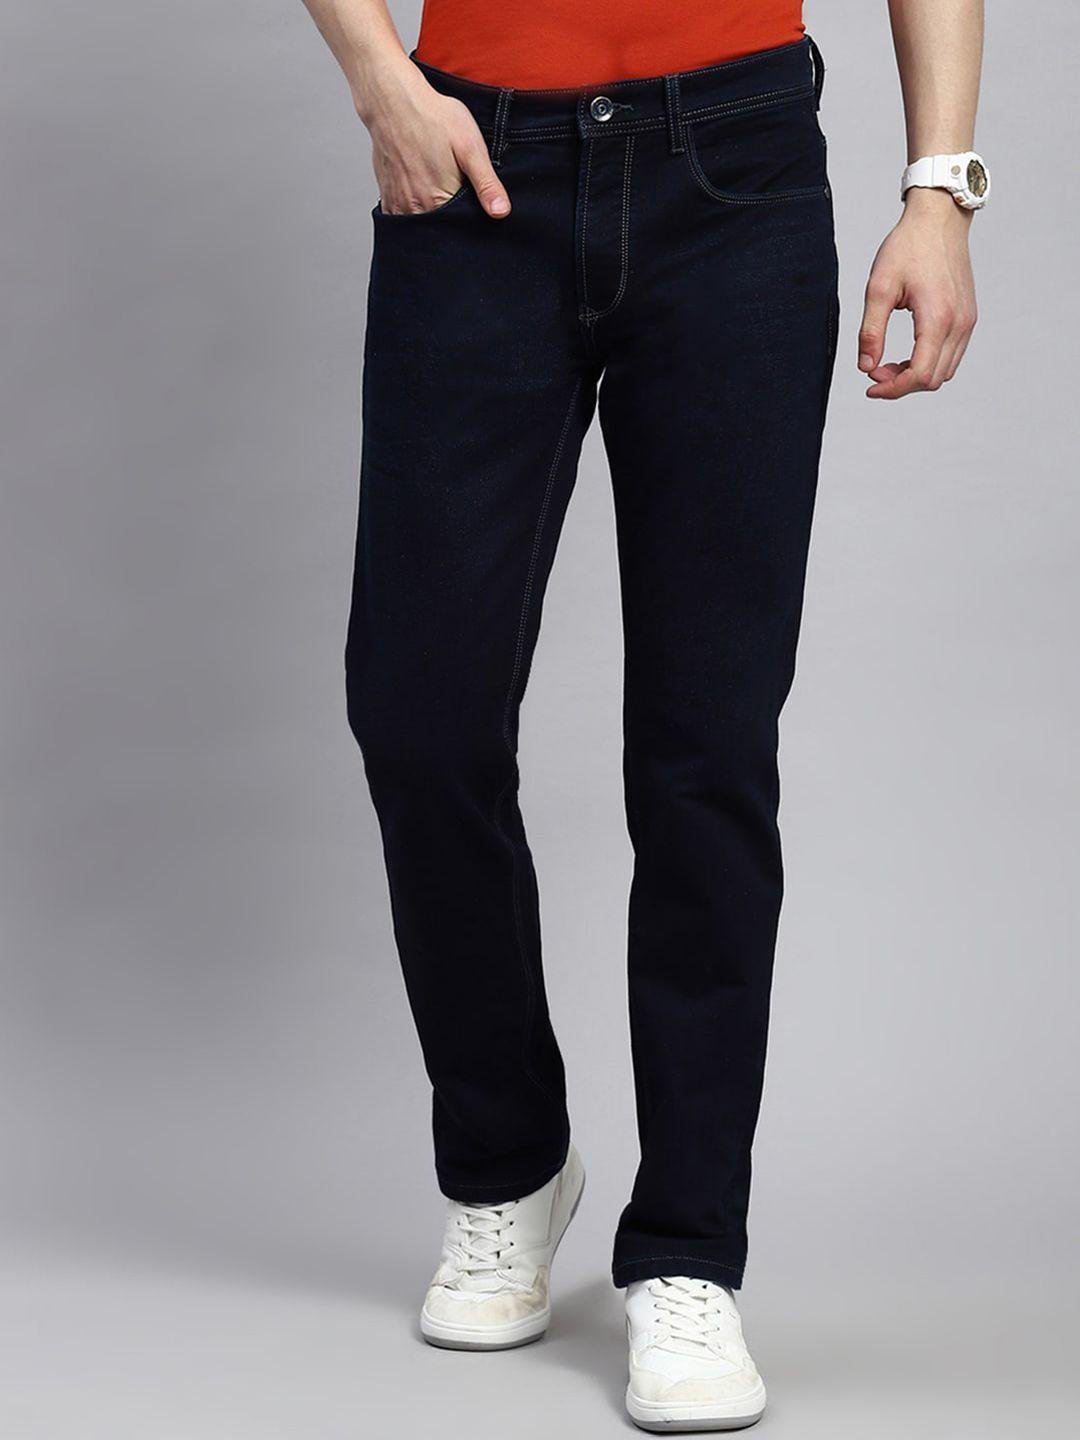 monte-carlo-men-clean-look-straight-fit-jeans